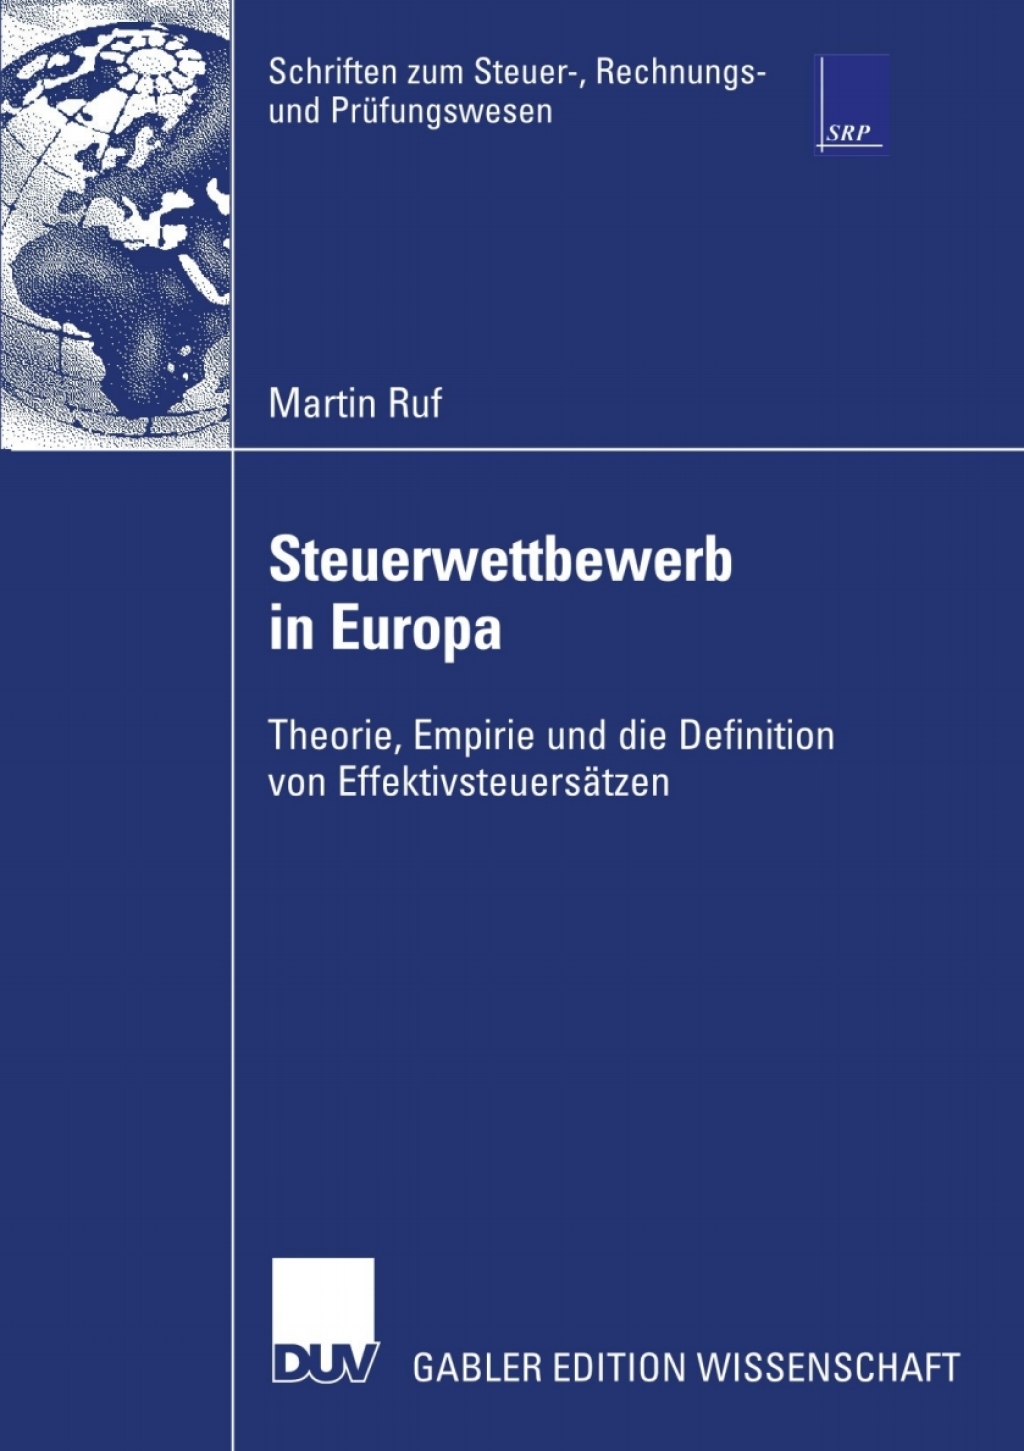 ISBN 9783835006140 product image for Steuerwettbewerb in Europa (eBook Rental) | upcitemdb.com